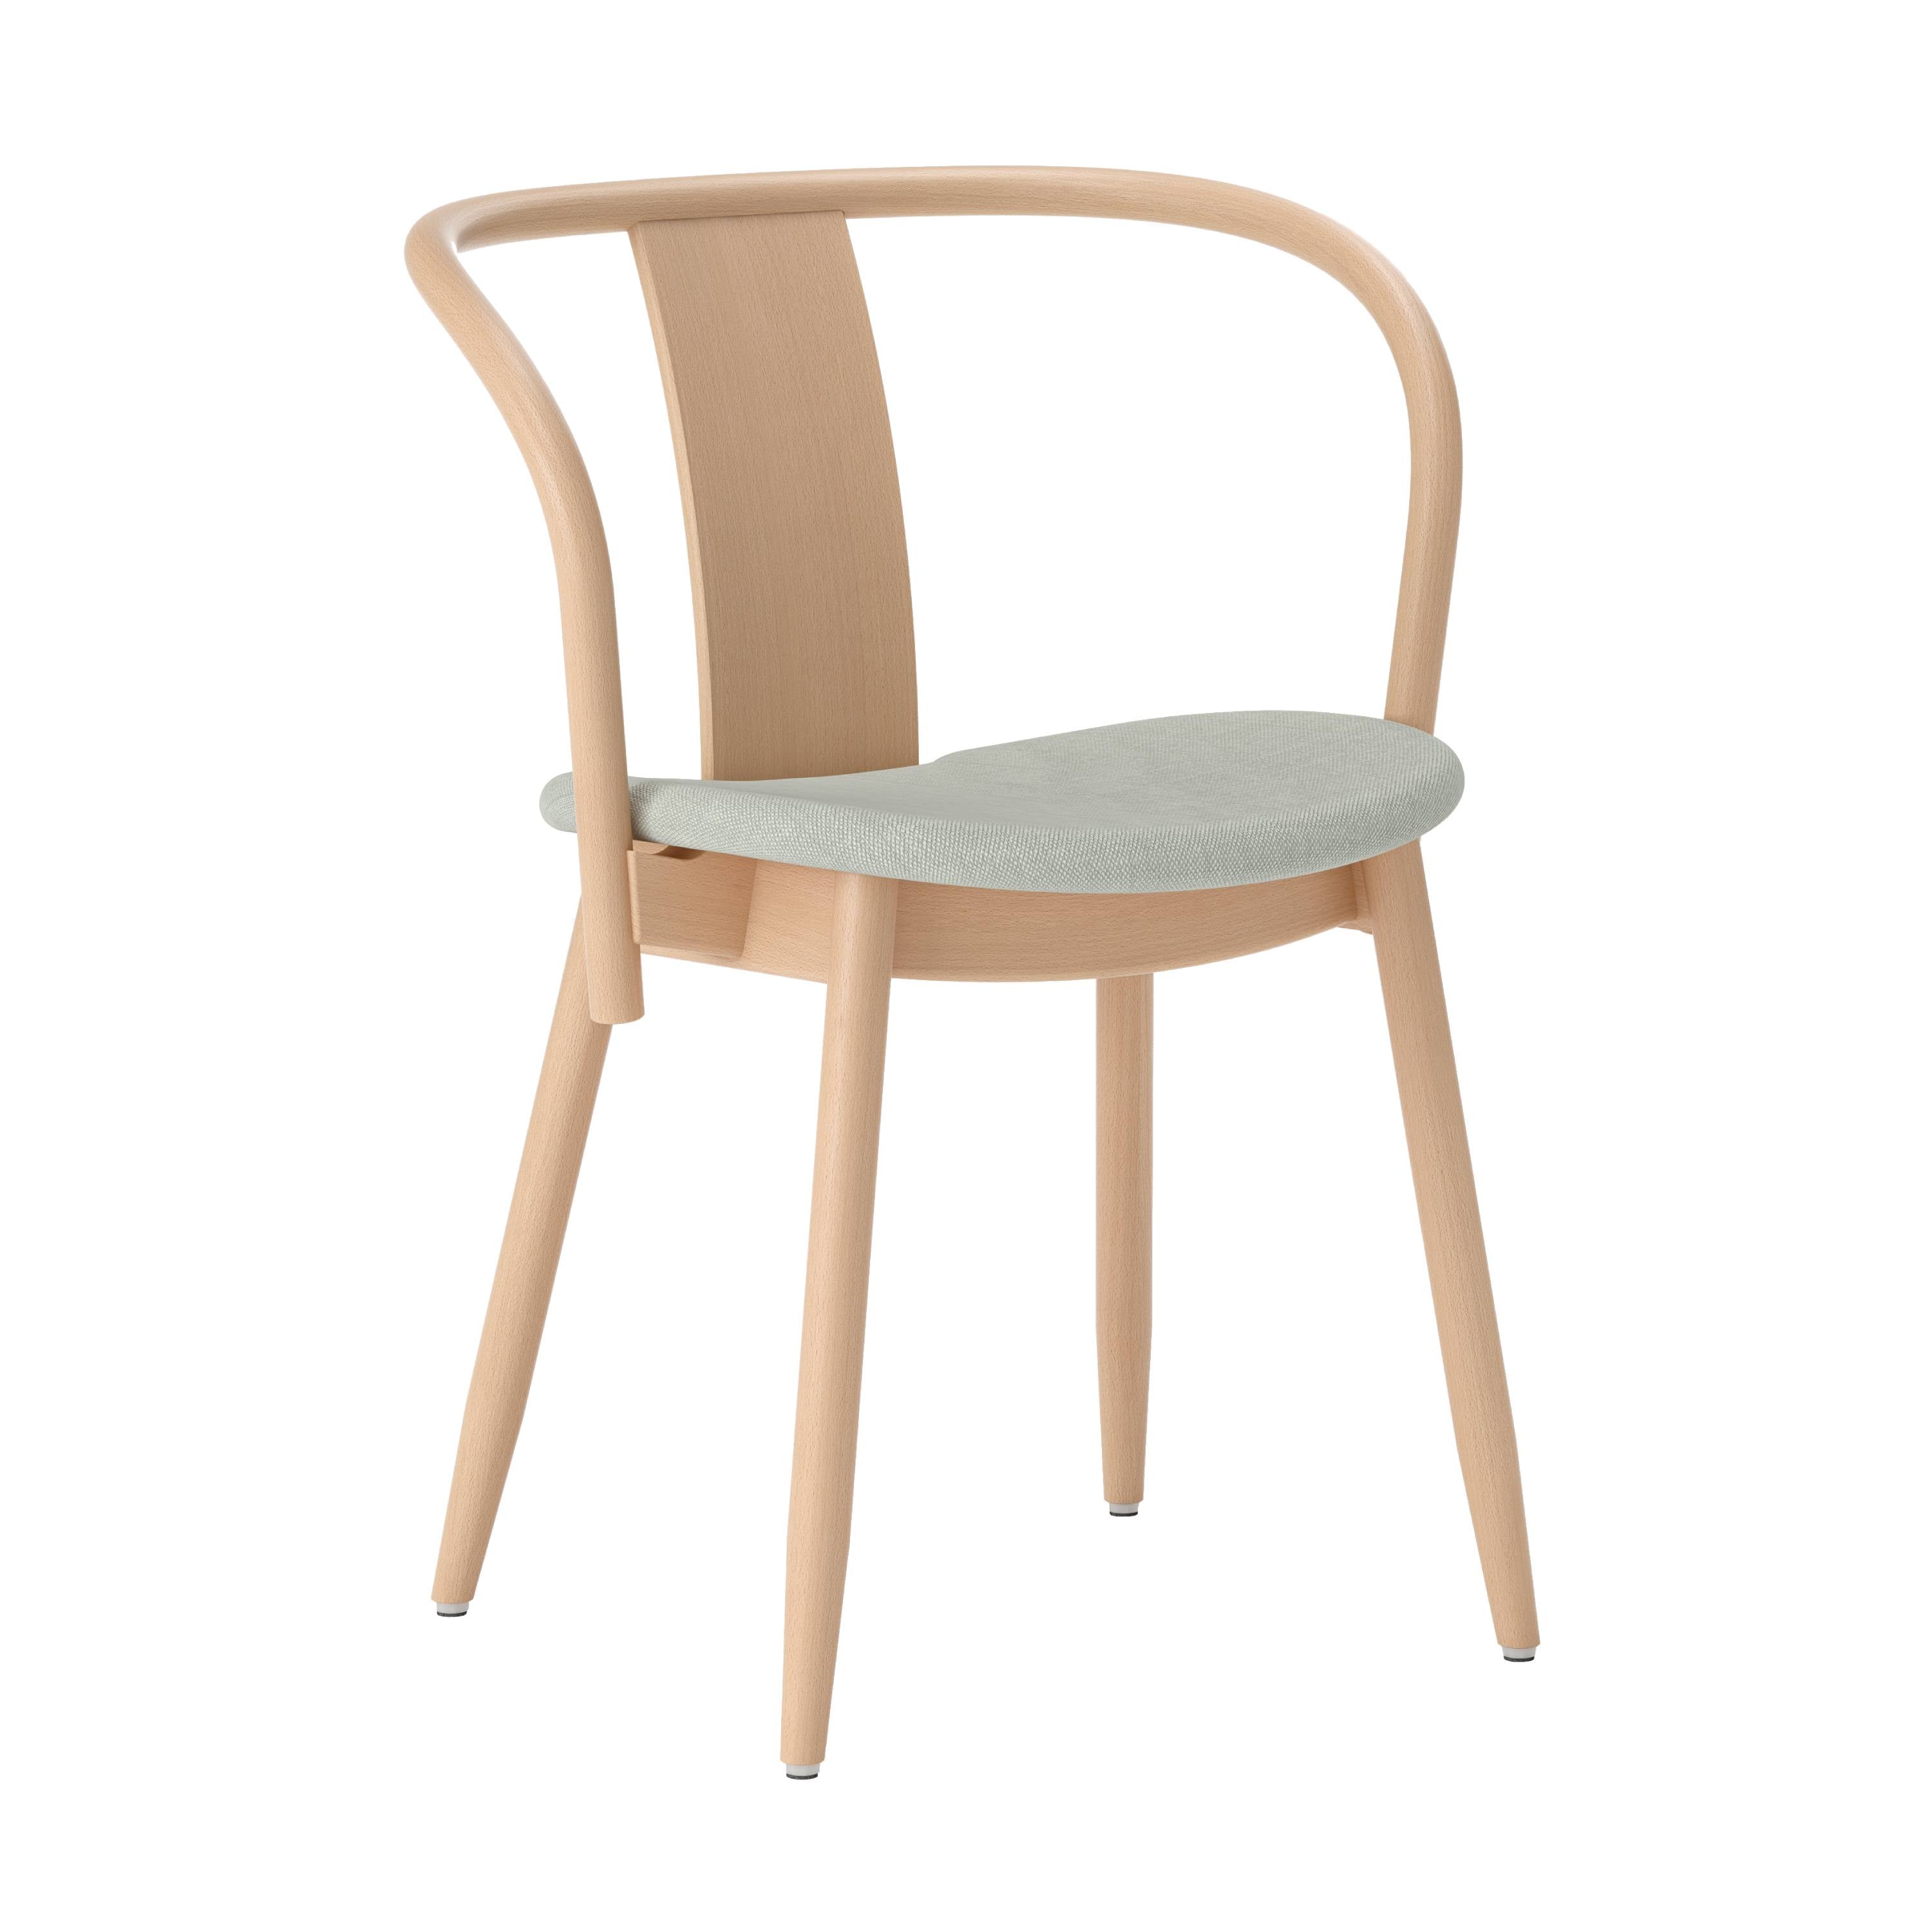 Icha Chair: Upholstered + Natural Beech